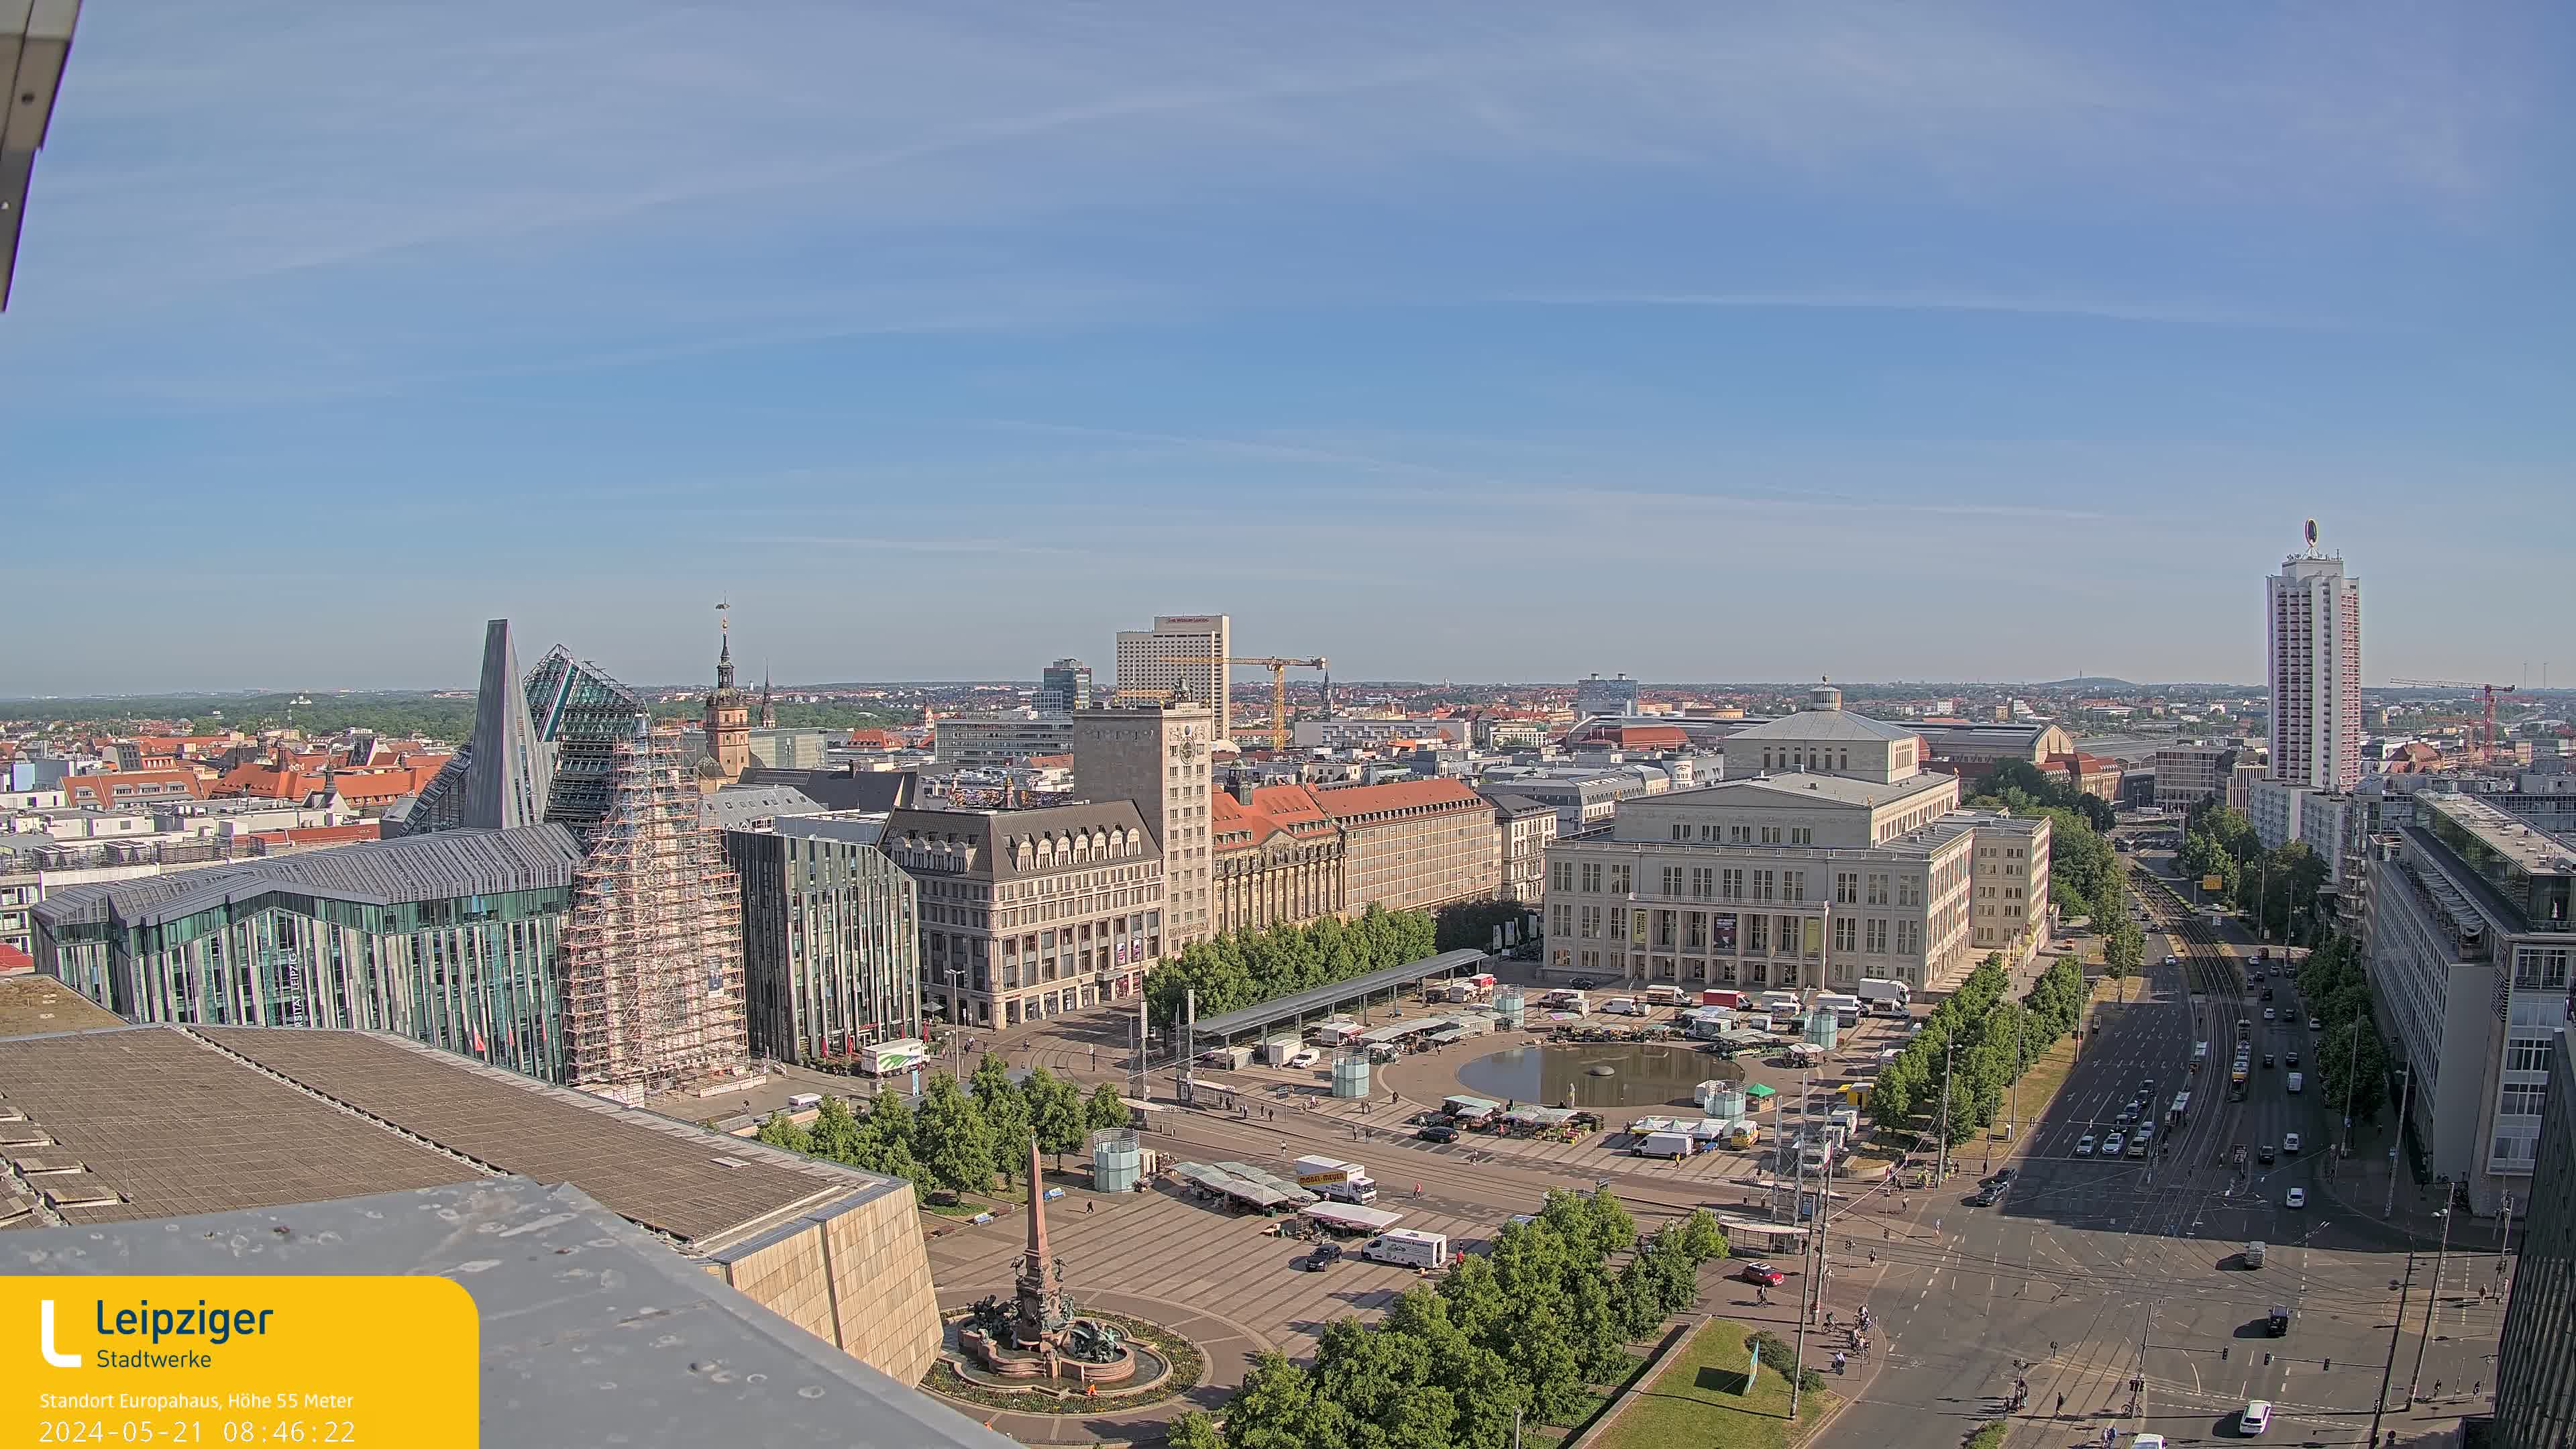 Leipzig Vie. 08:46